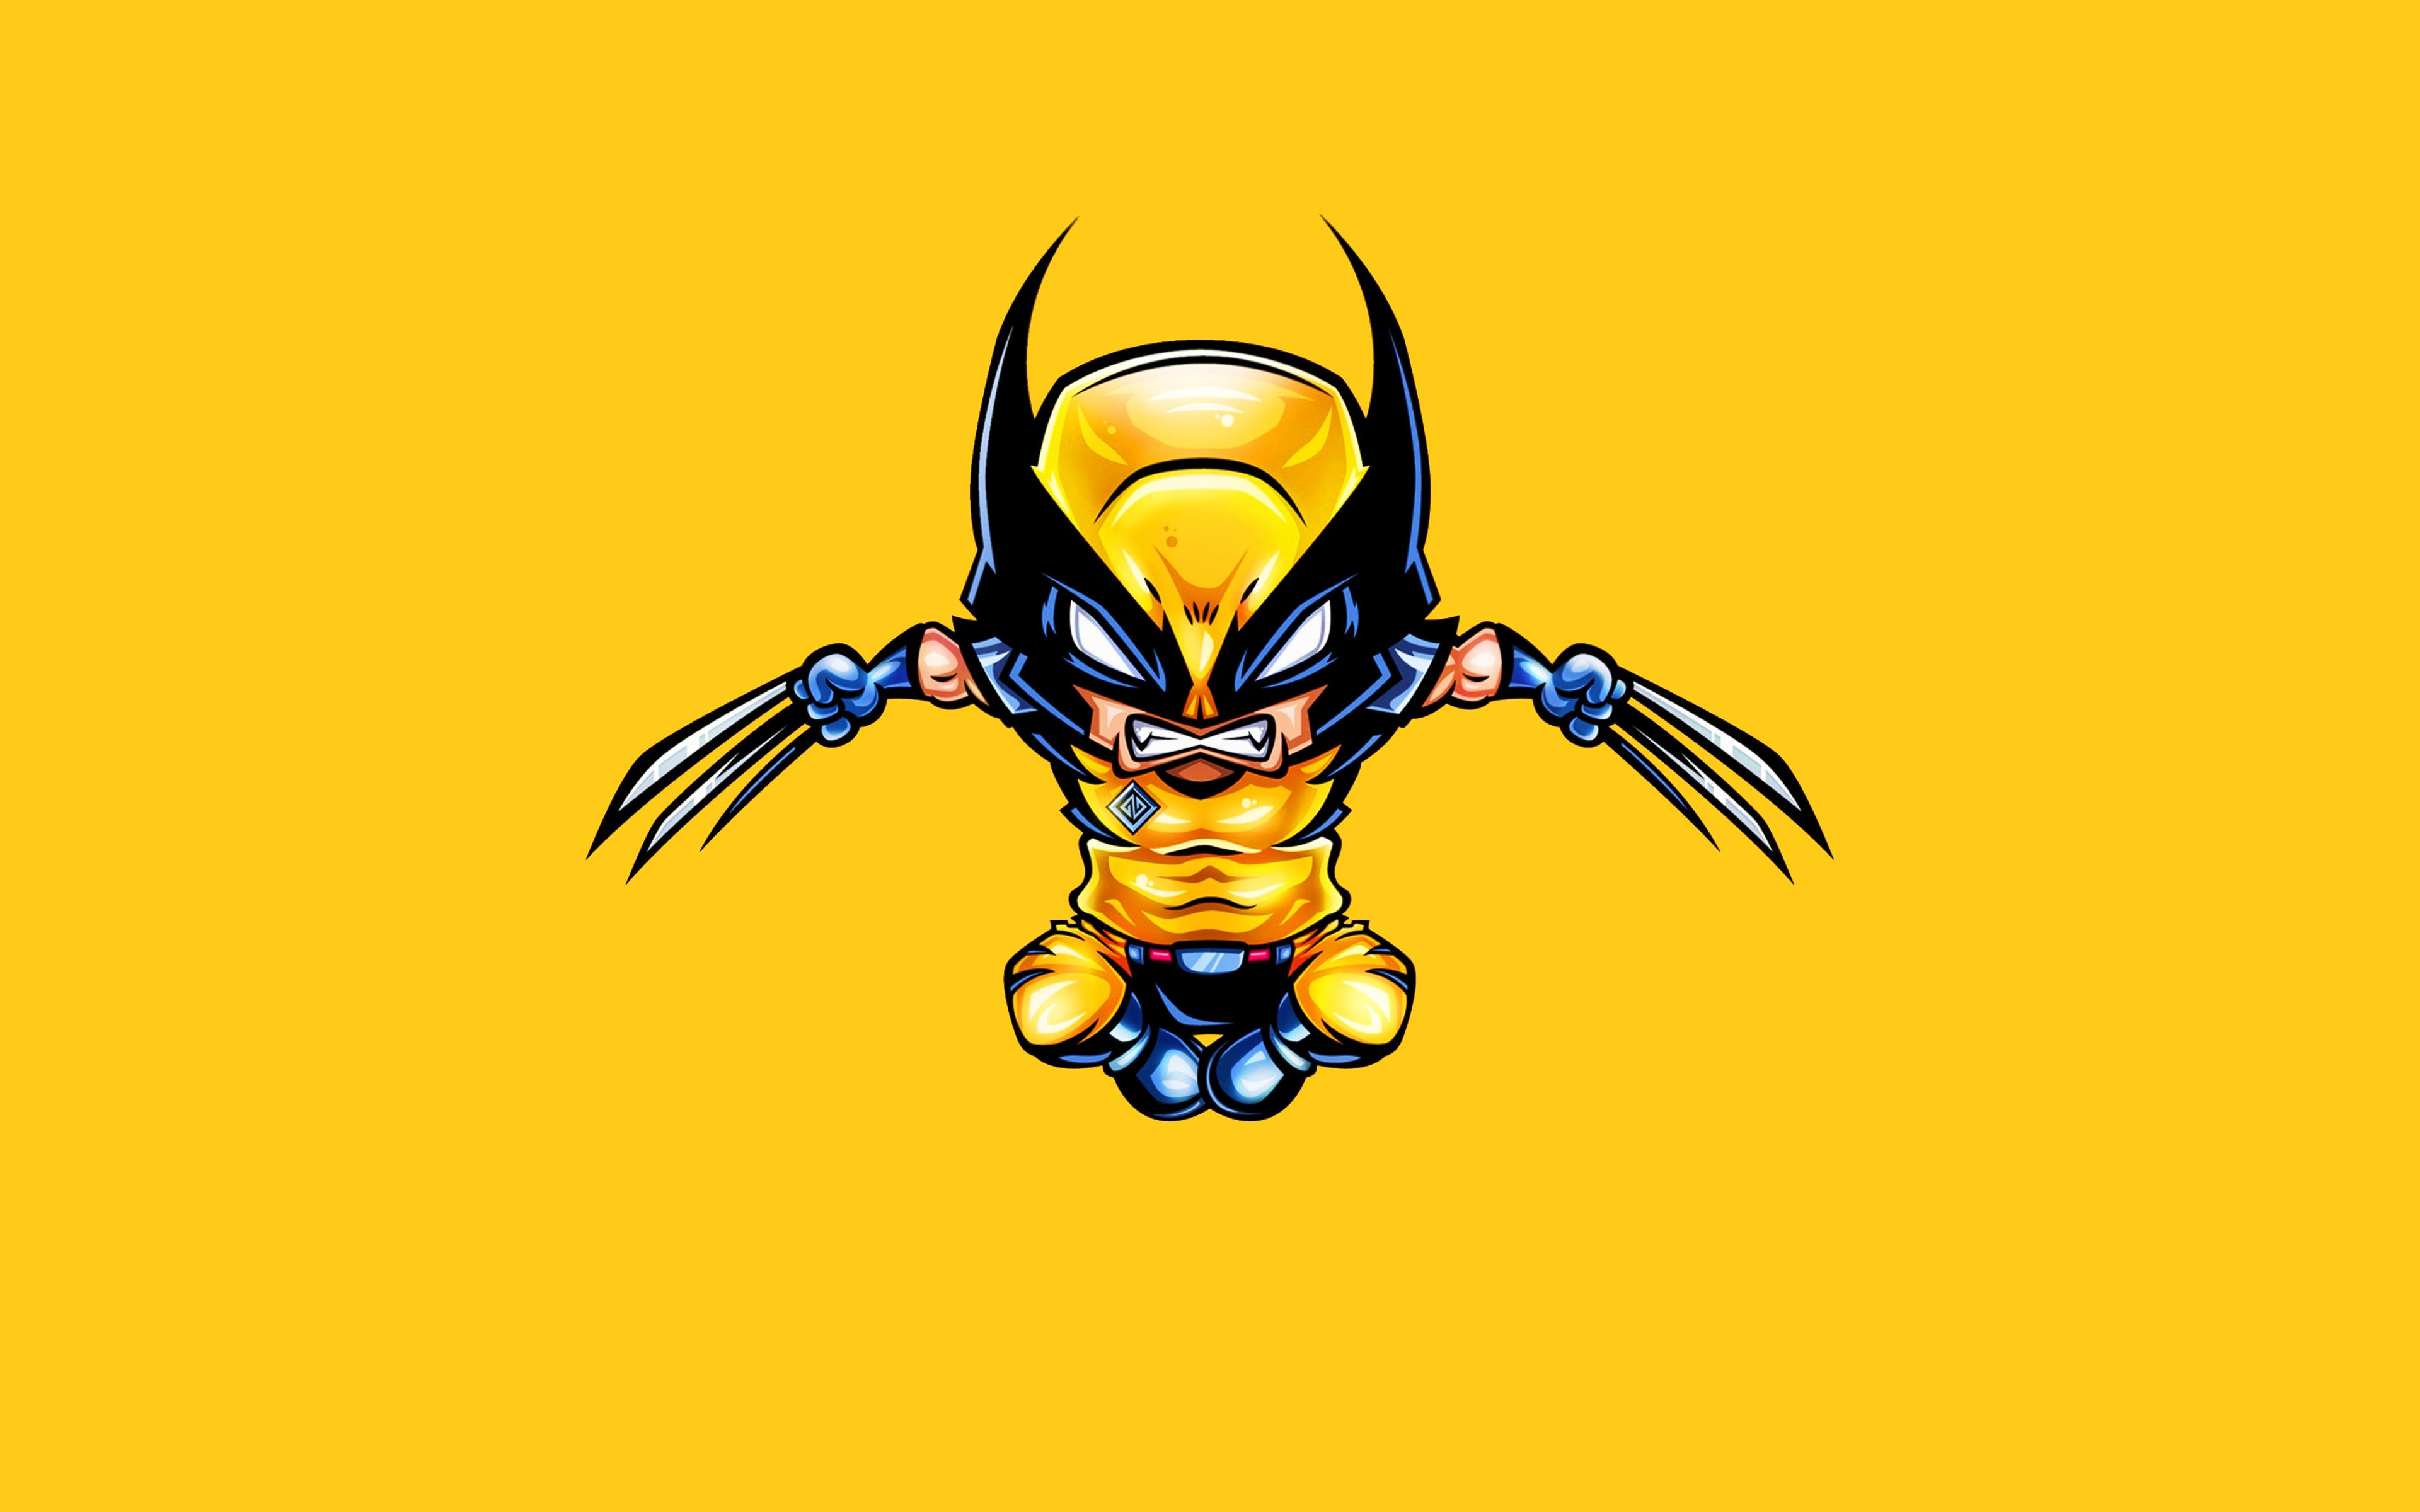 Download Wallpaper Wolverine, 4k, Logan, Yellow Background, Superheroes, James Howlett, Minimal, X Men, Marvel Comics For Desktop With Resolution 3840x2400. High Quality HD Picture Wallpaper